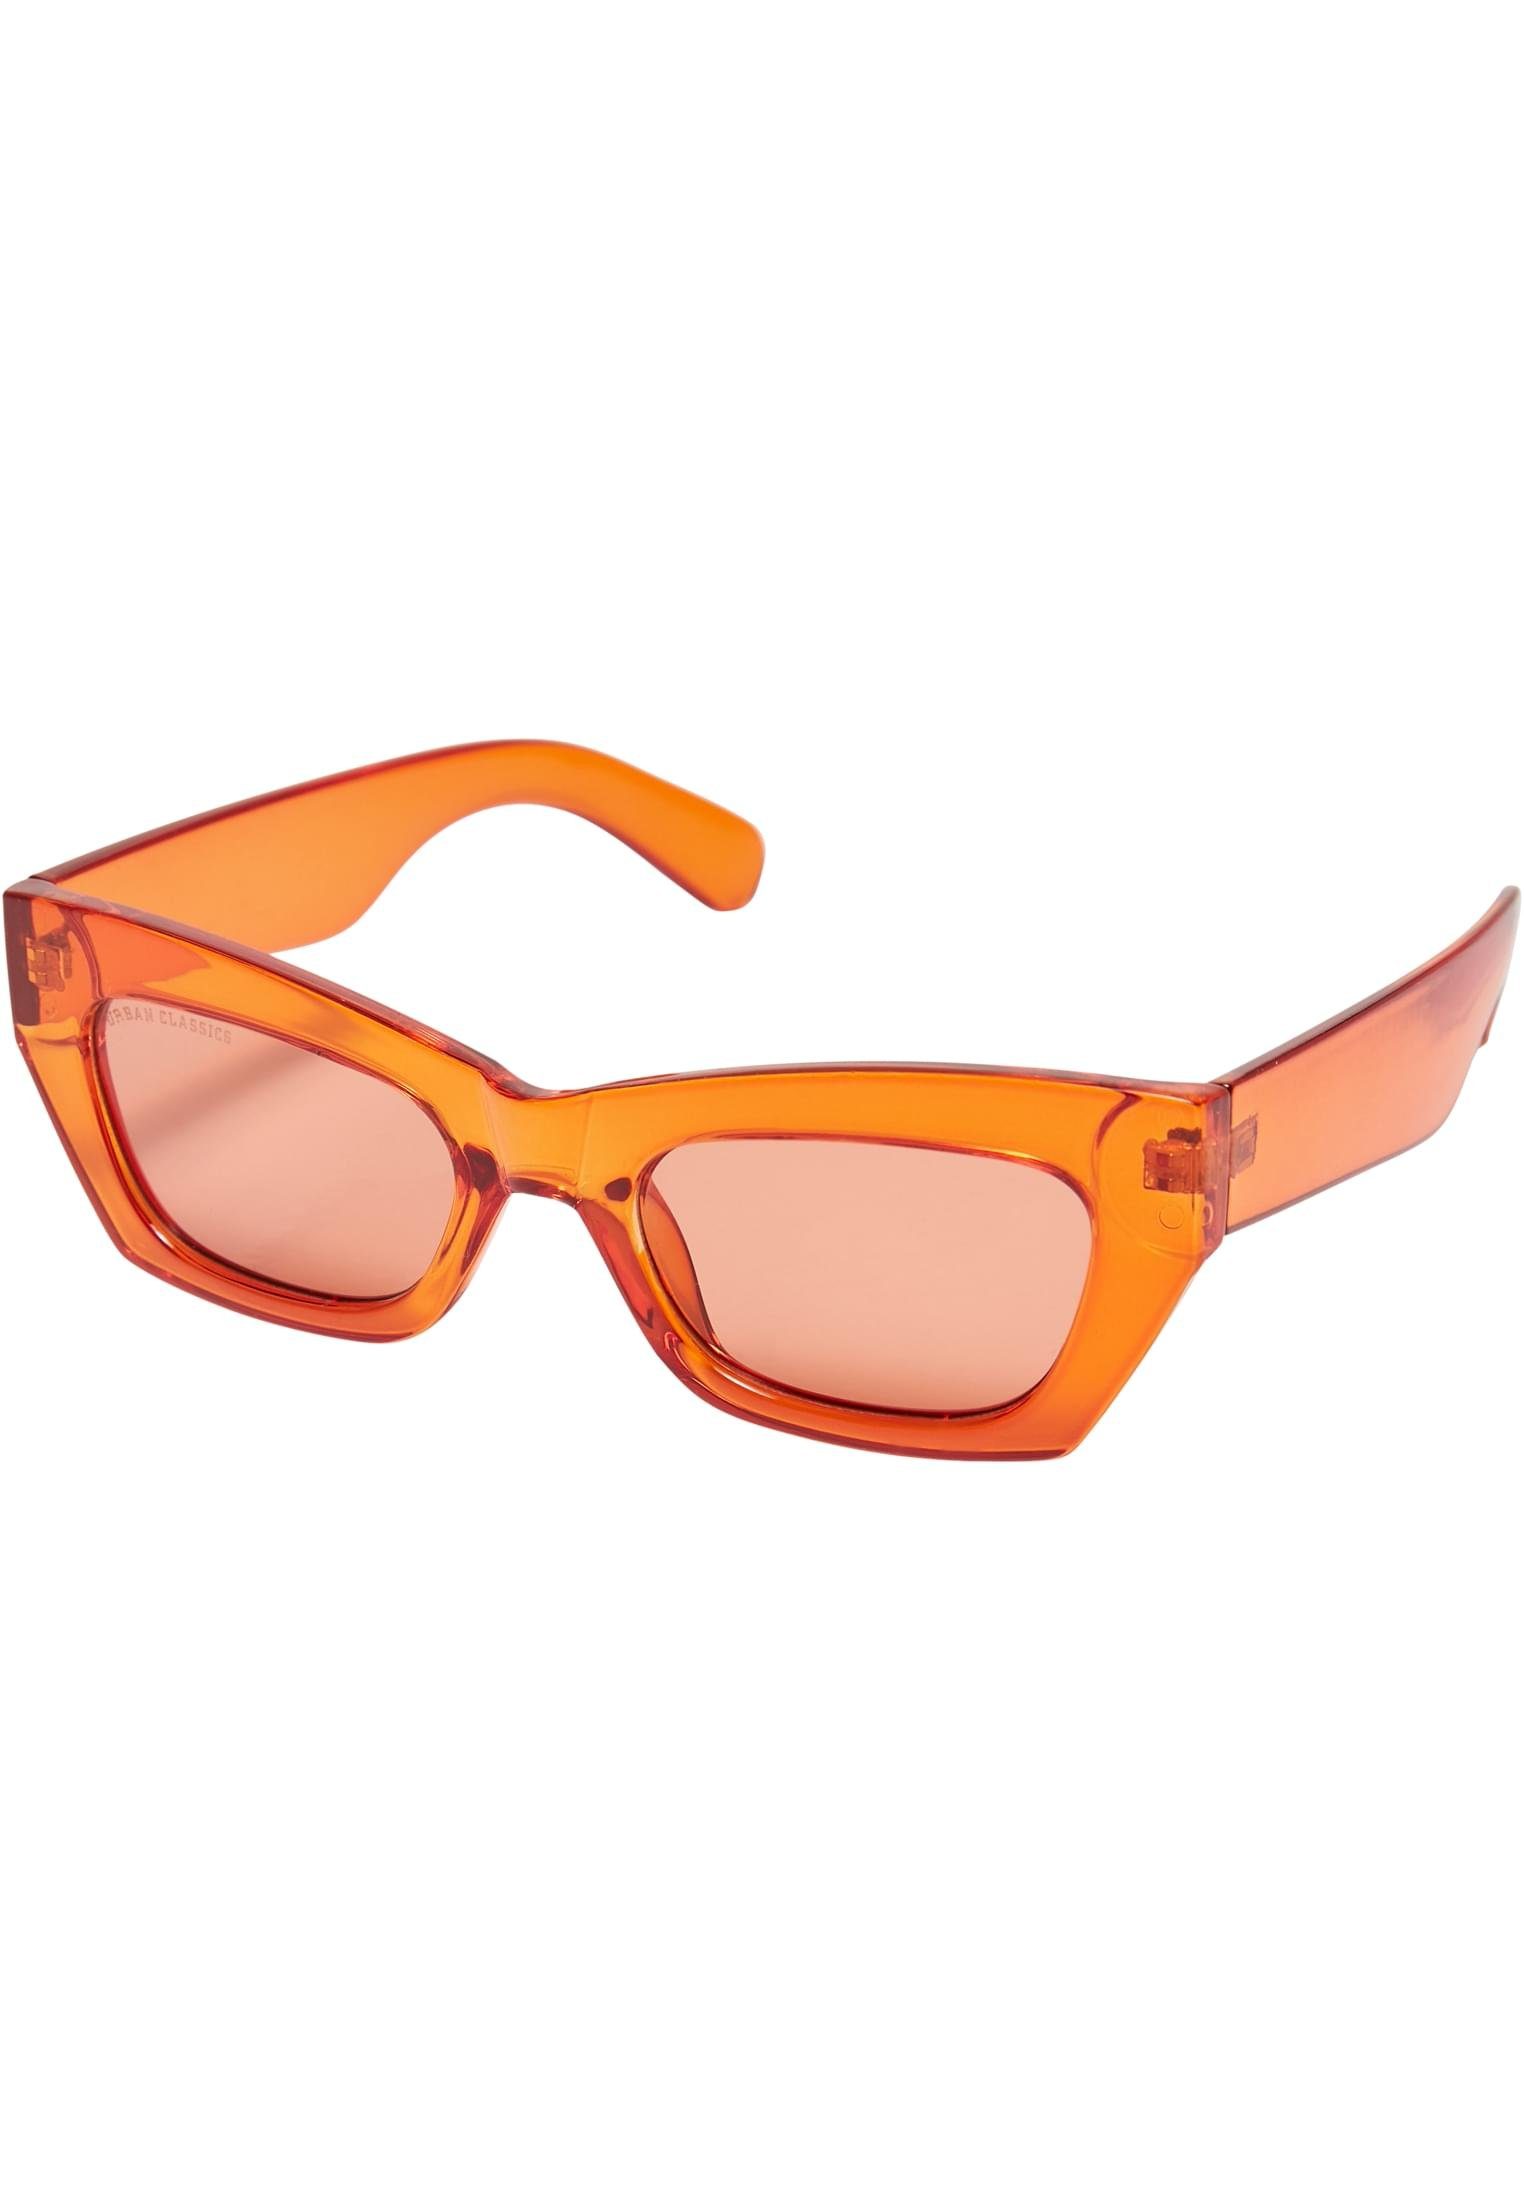 Venice URBAN Sonnenbrille Unisex transparentvintageorange Sunglasses CLASSICS